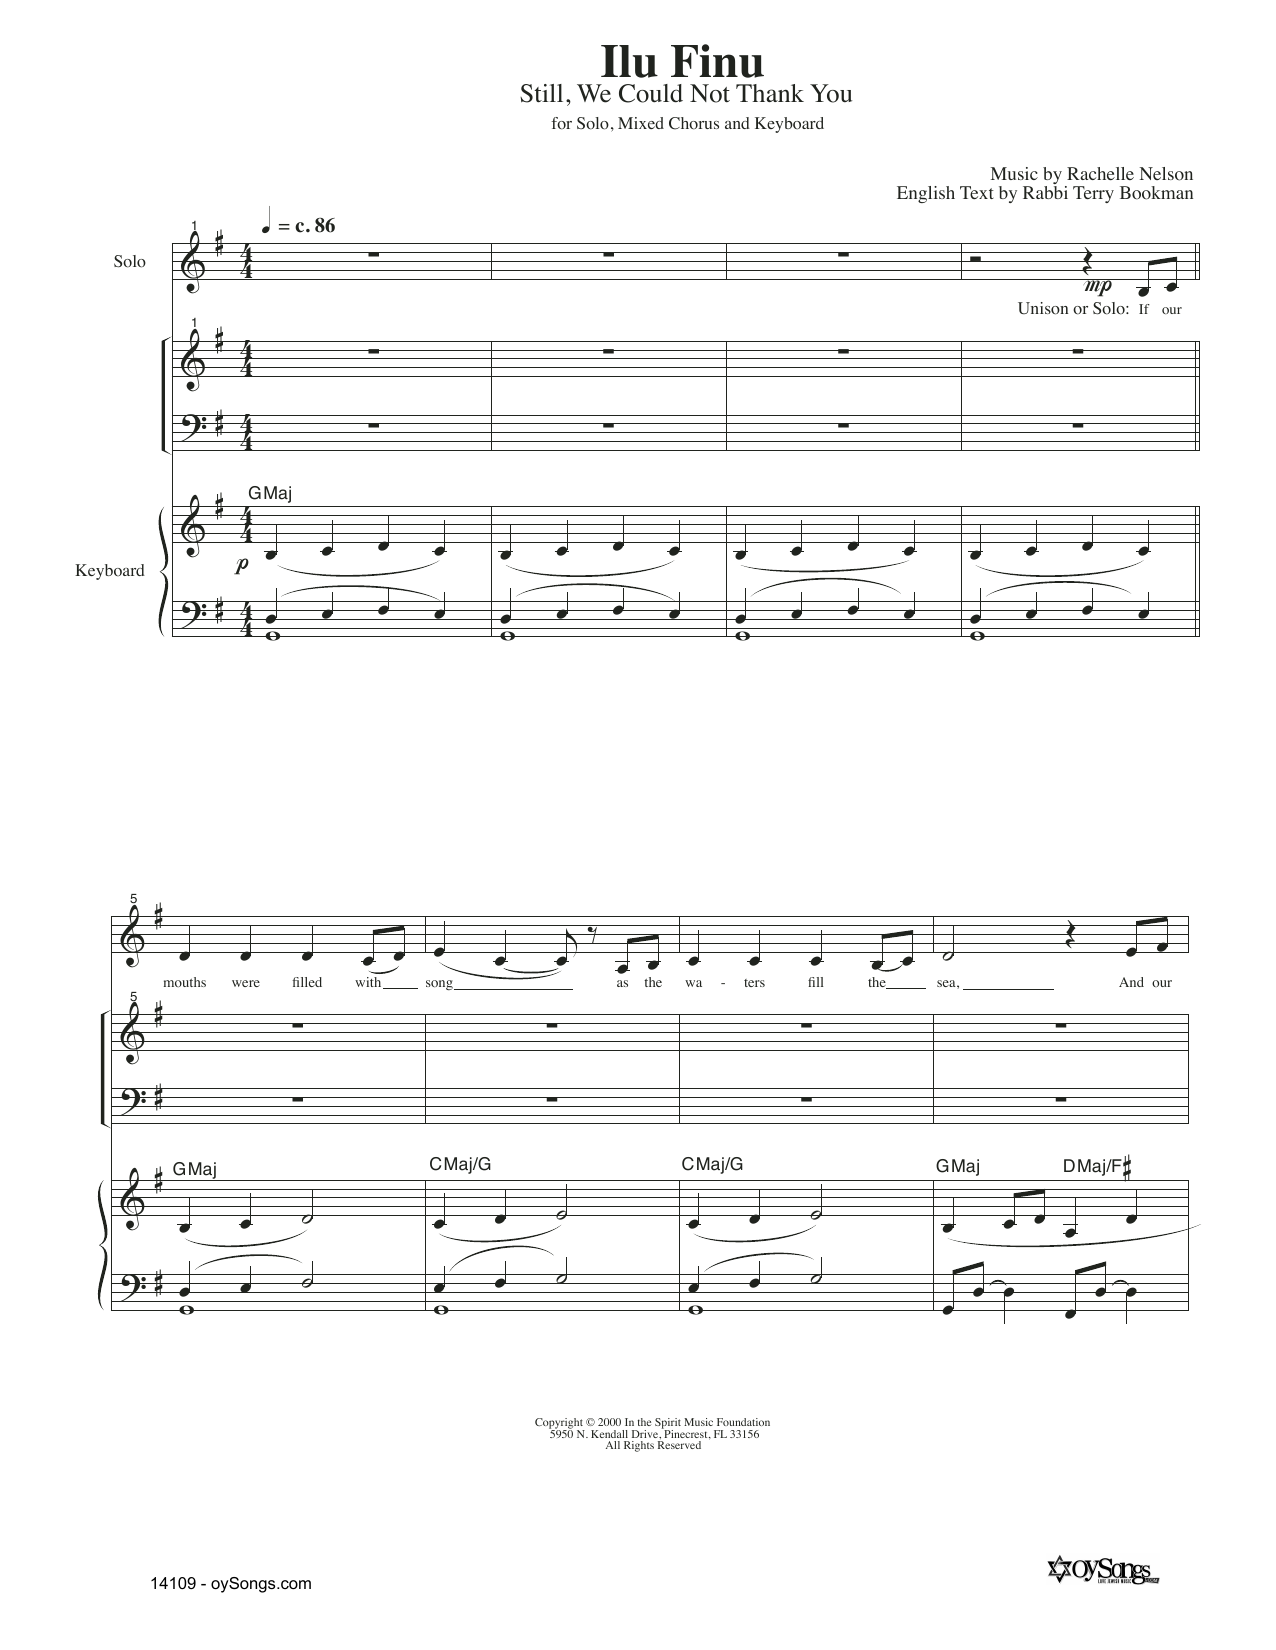 Rachelle Nelson Ilu Finu Sheet Music Notes & Chords for SATB Choir - Download or Print PDF